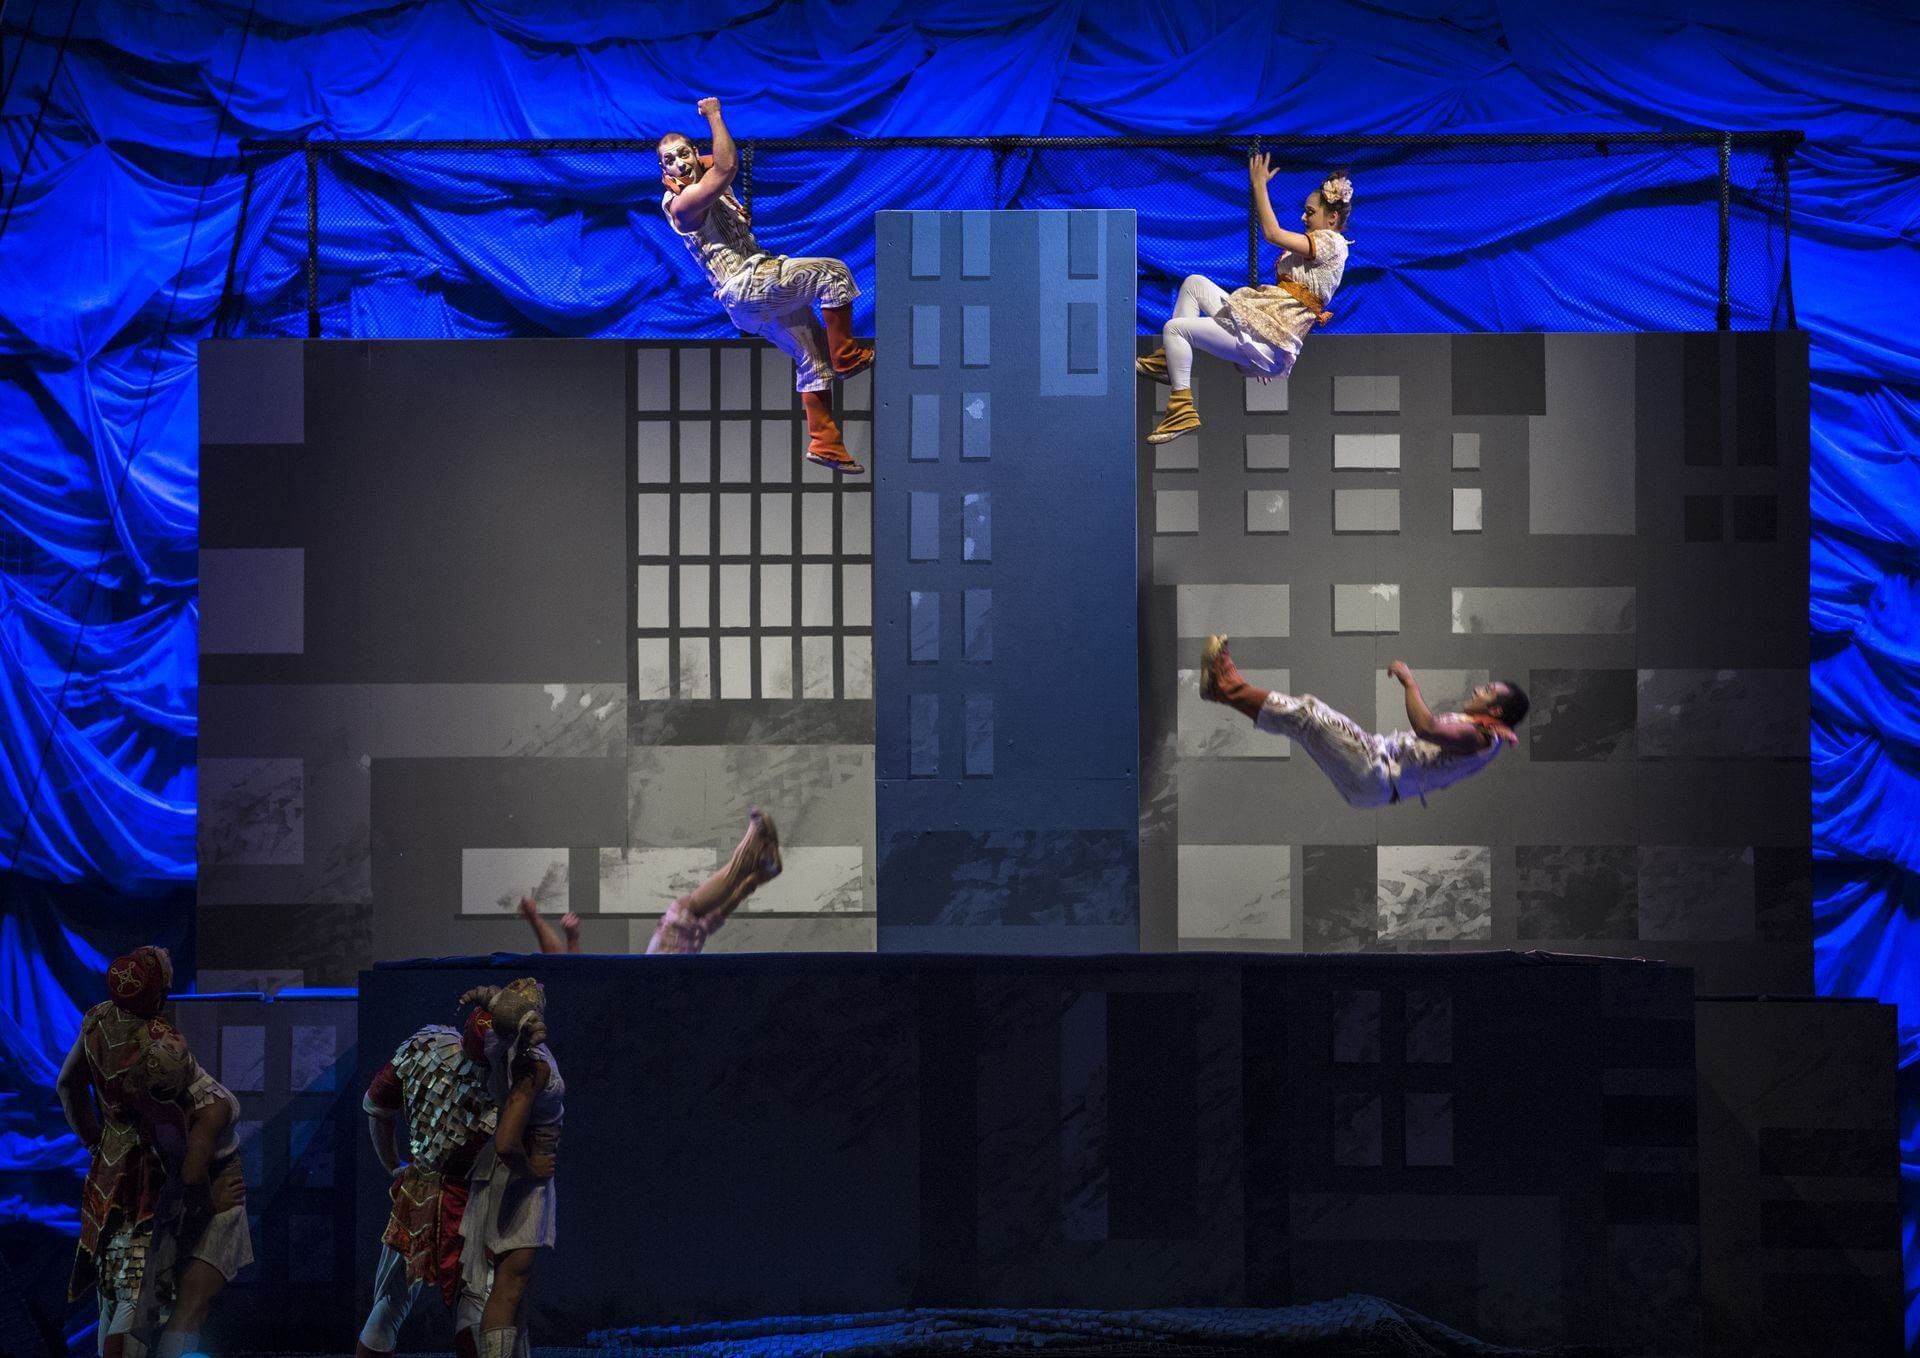 Scalada by Cirque du Soleil 2013: Coordinated group acrobatics